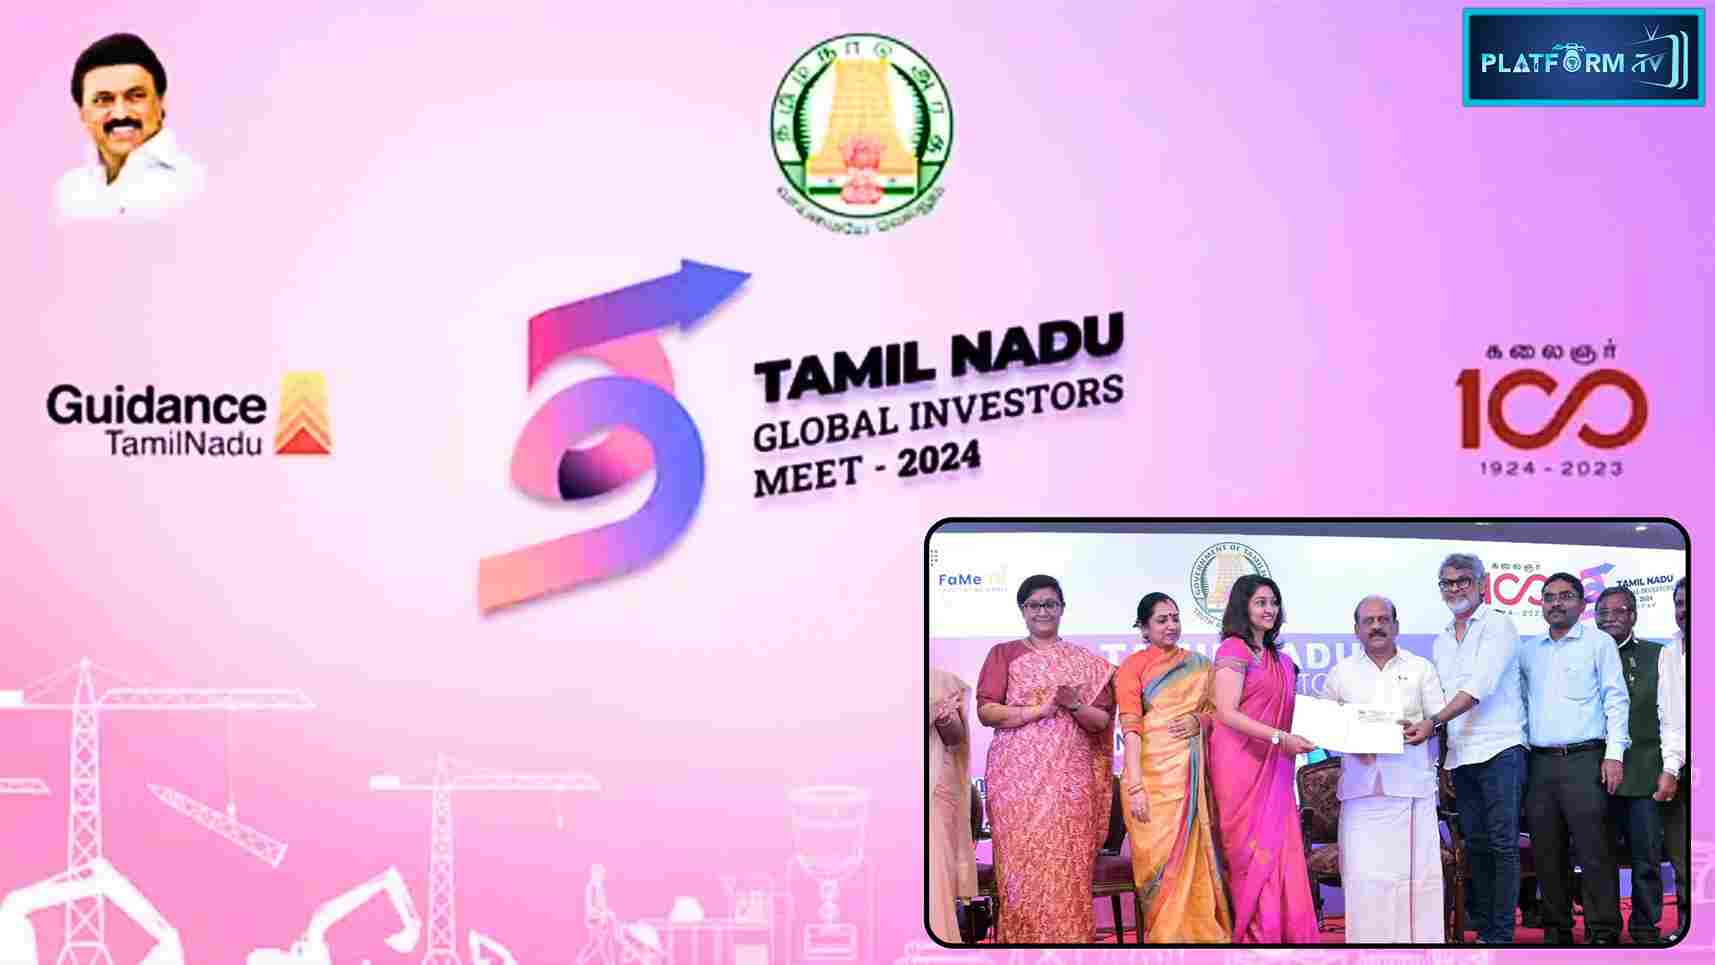 Global Investors Meet - Platform Tamil